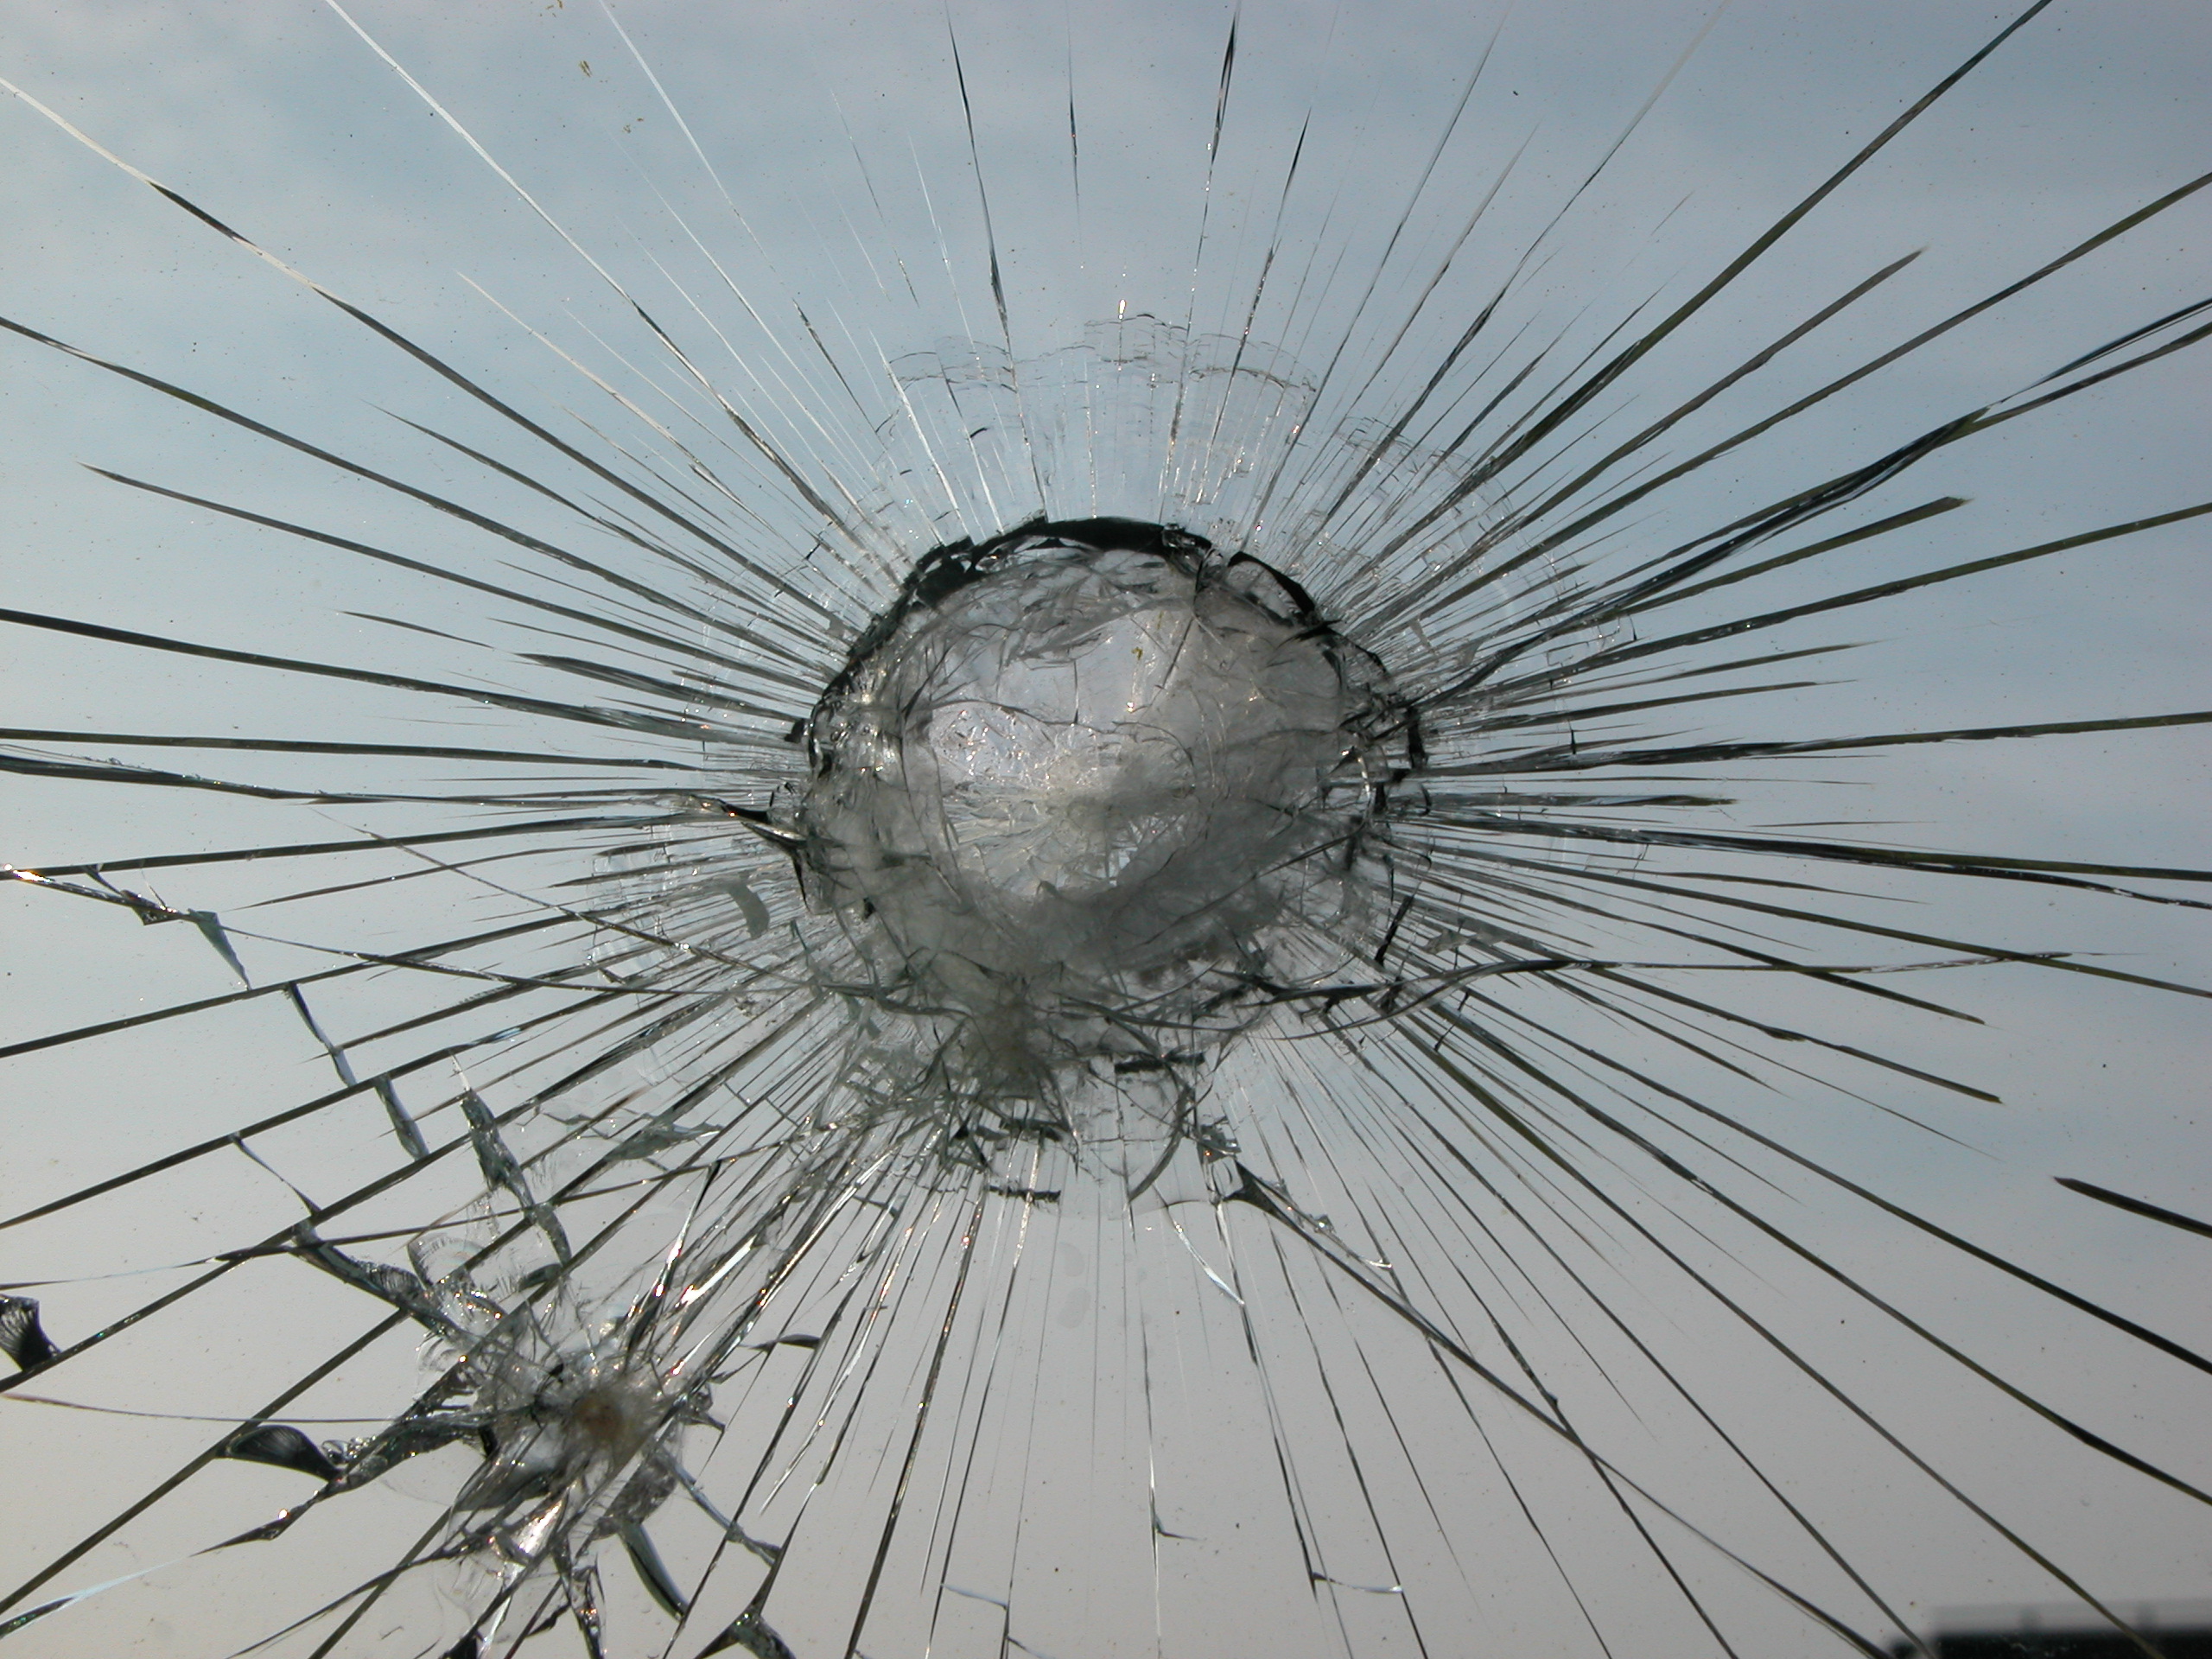 crack splintered glass window car windshield